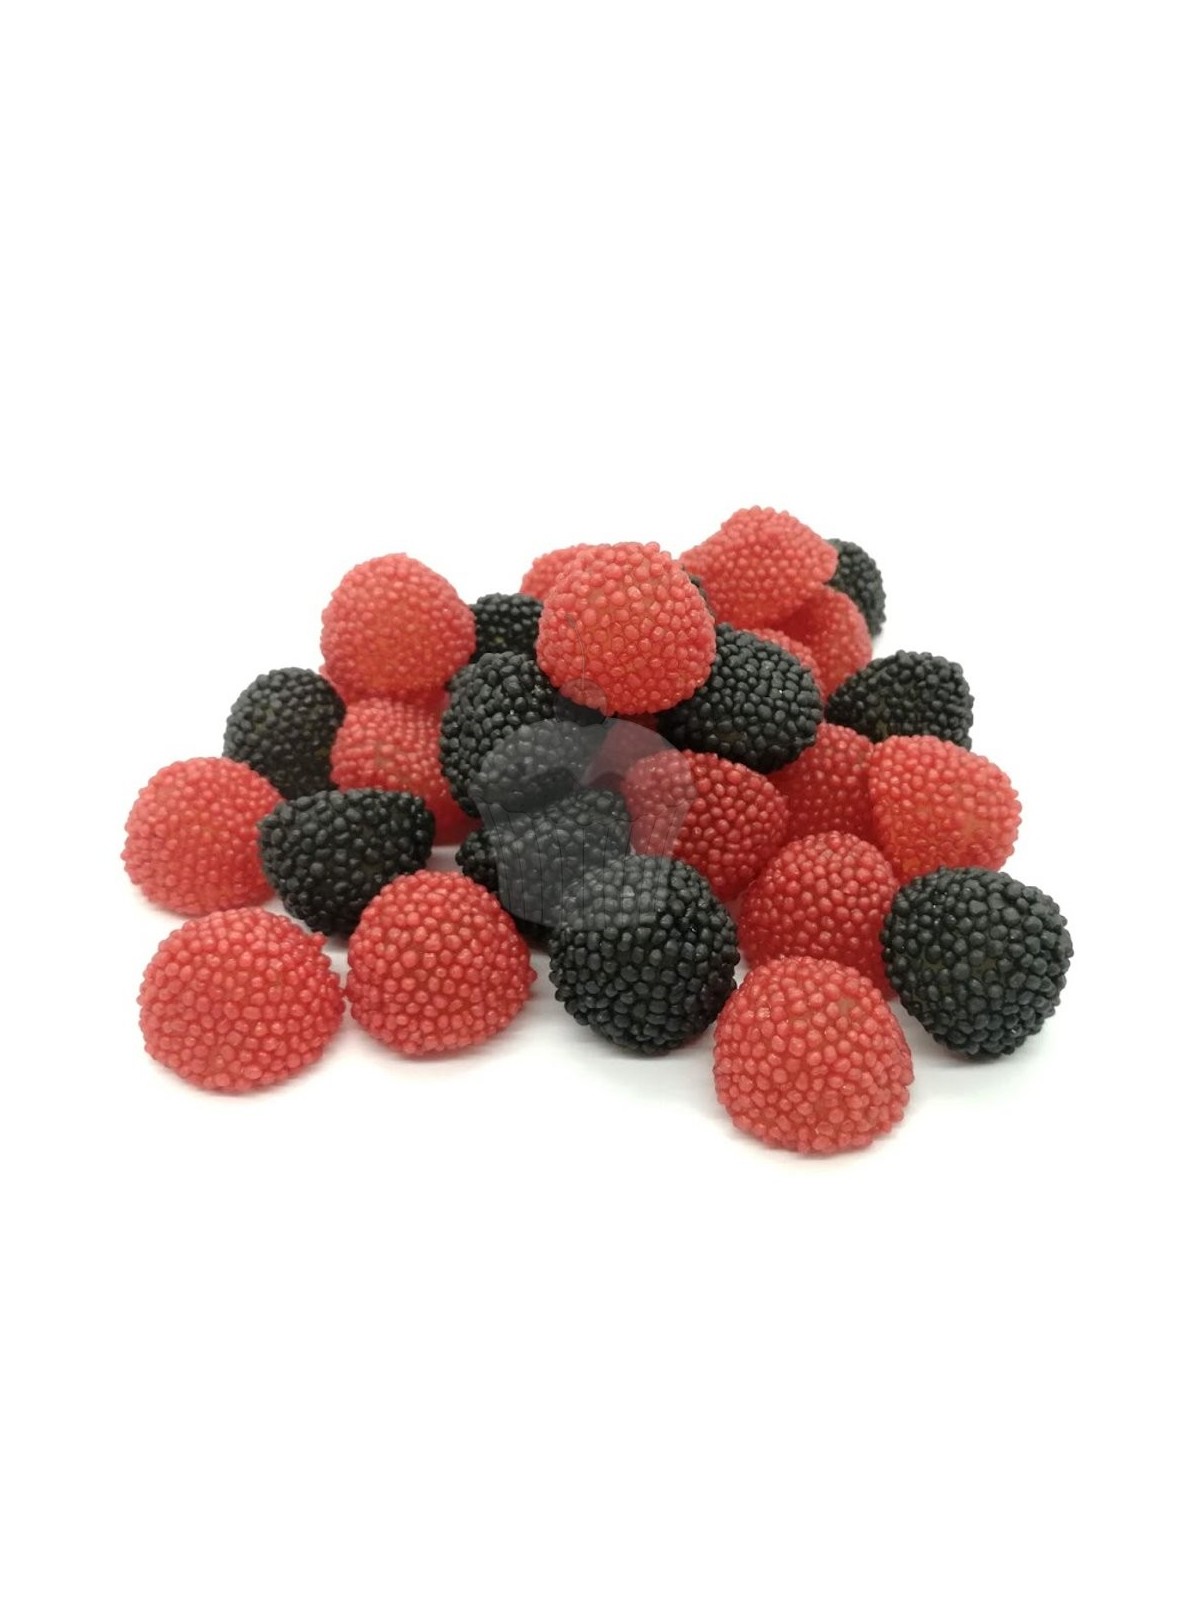 Jelly - raspberries and blackberries - 200g